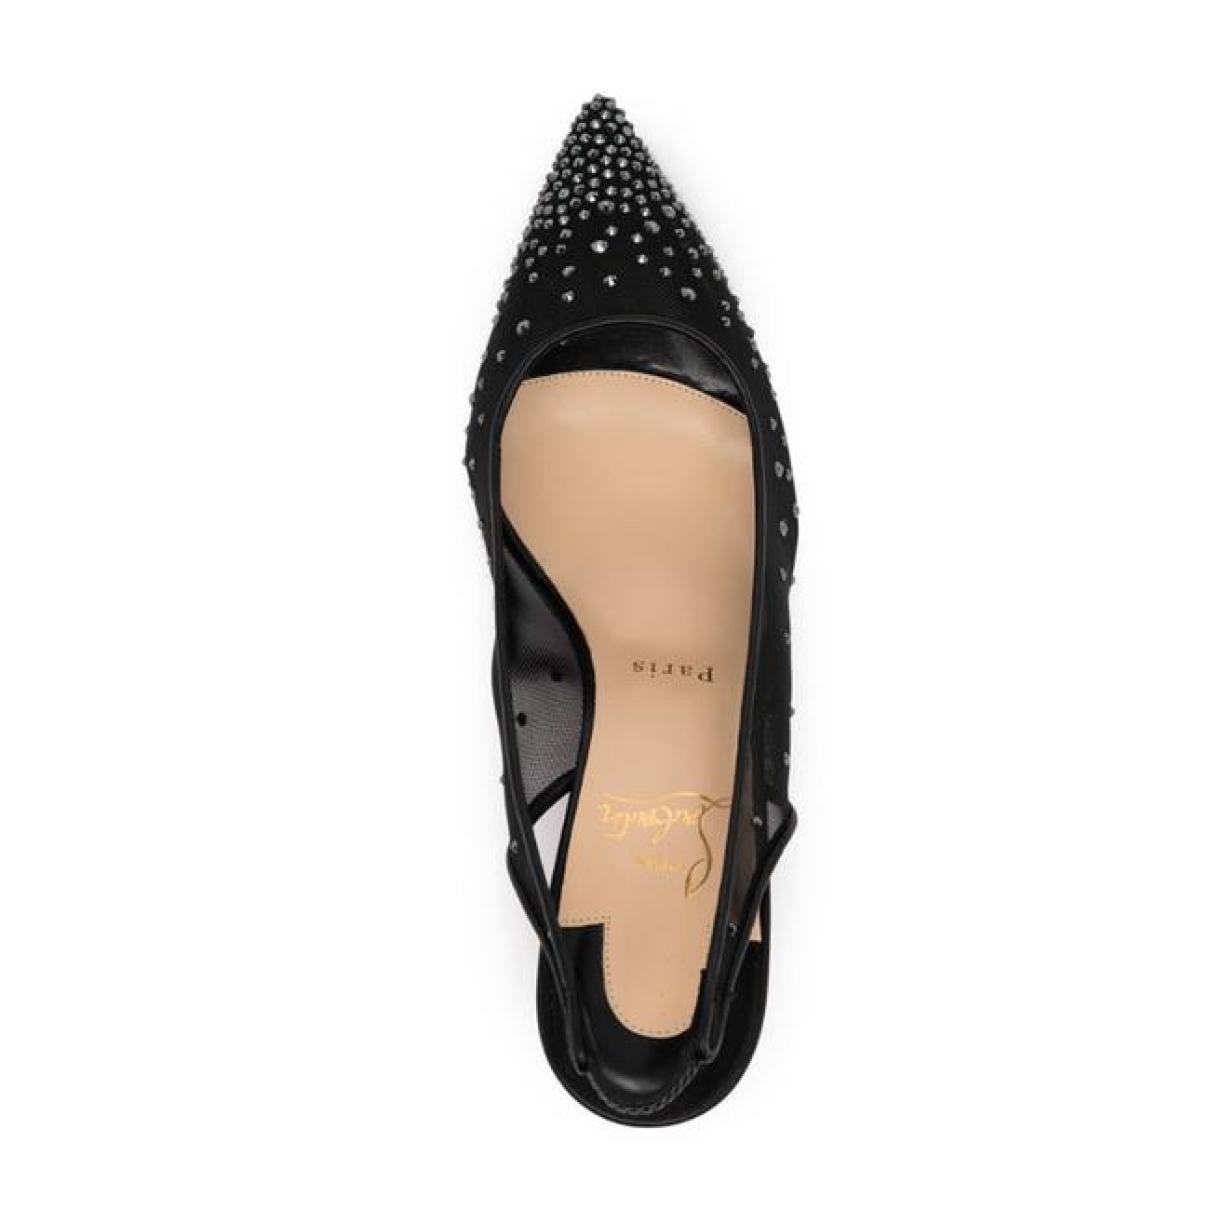 Follies Strass leather heels - 4